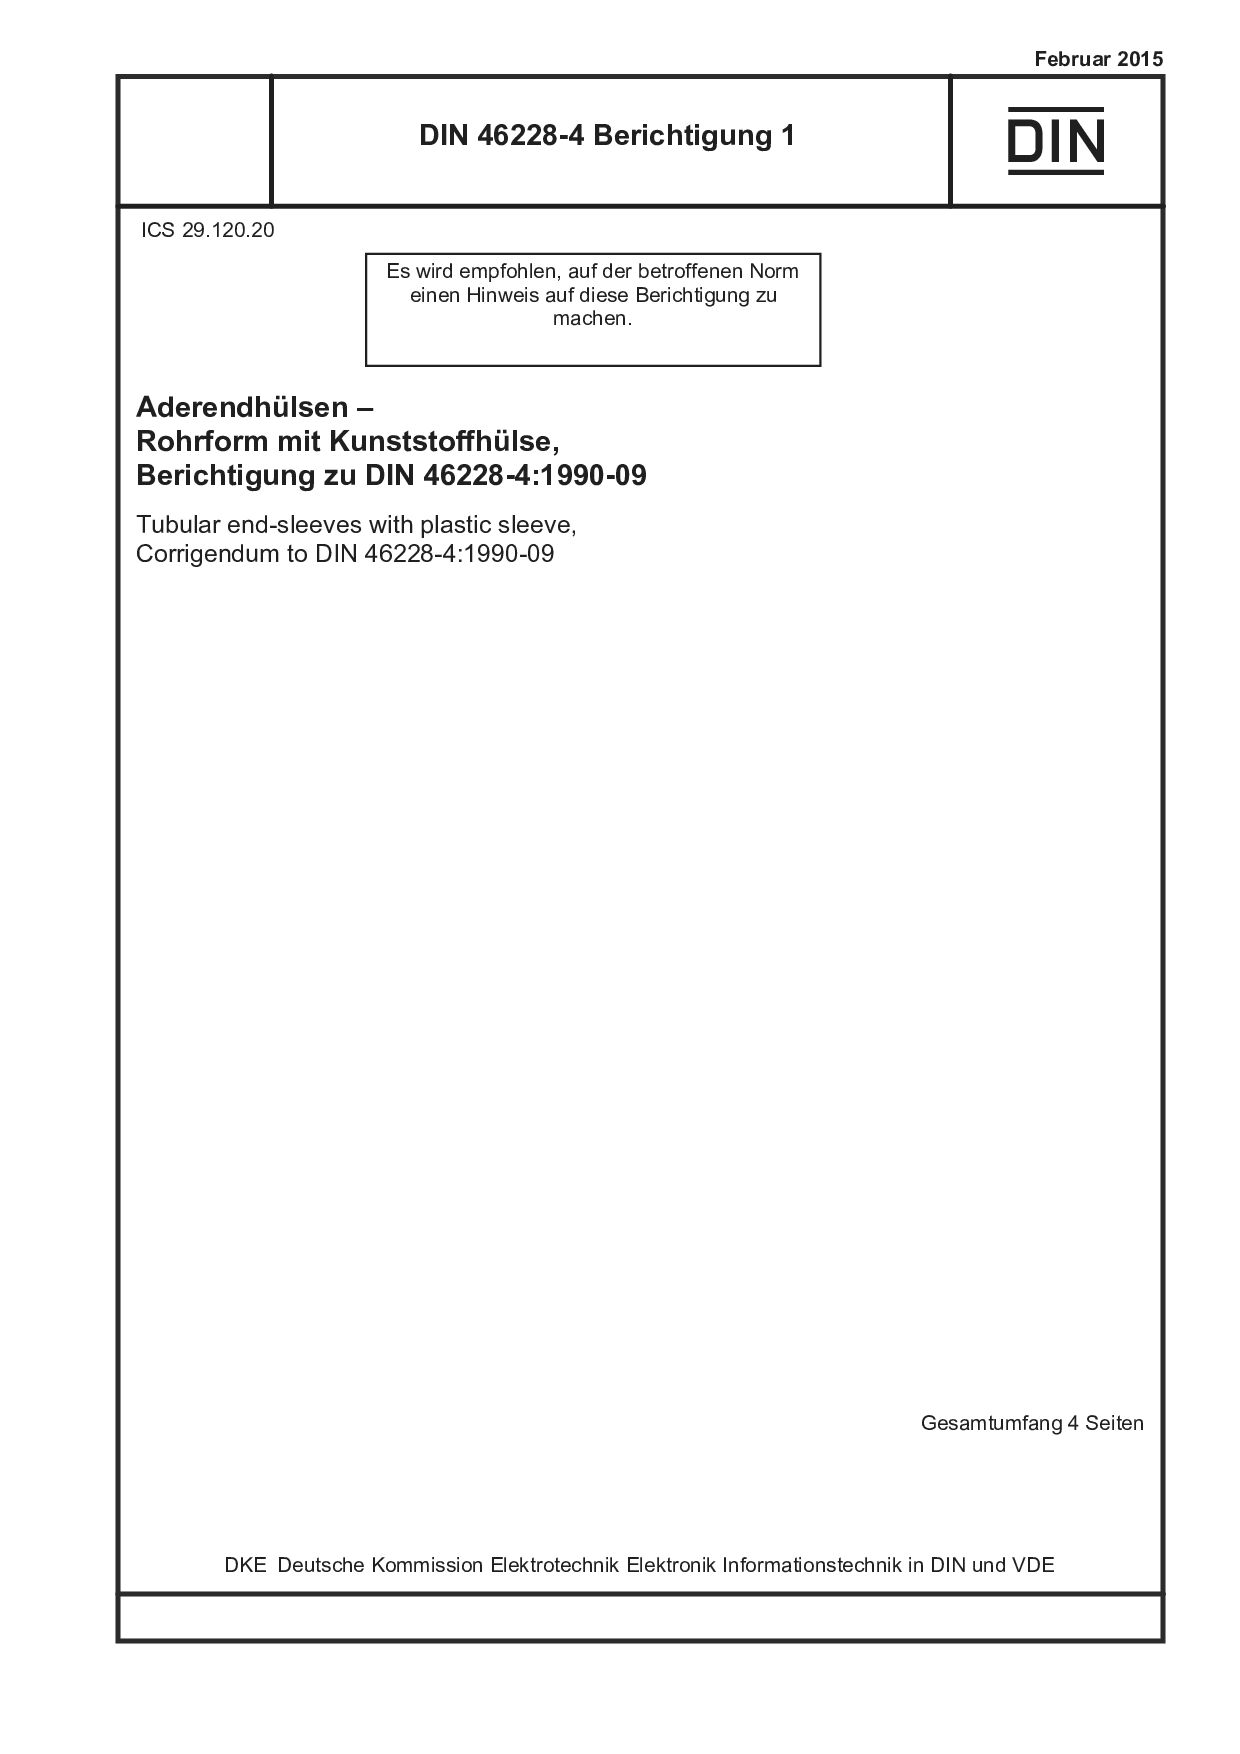 DIN 46228-4 Berichtigung 1:2015封面图